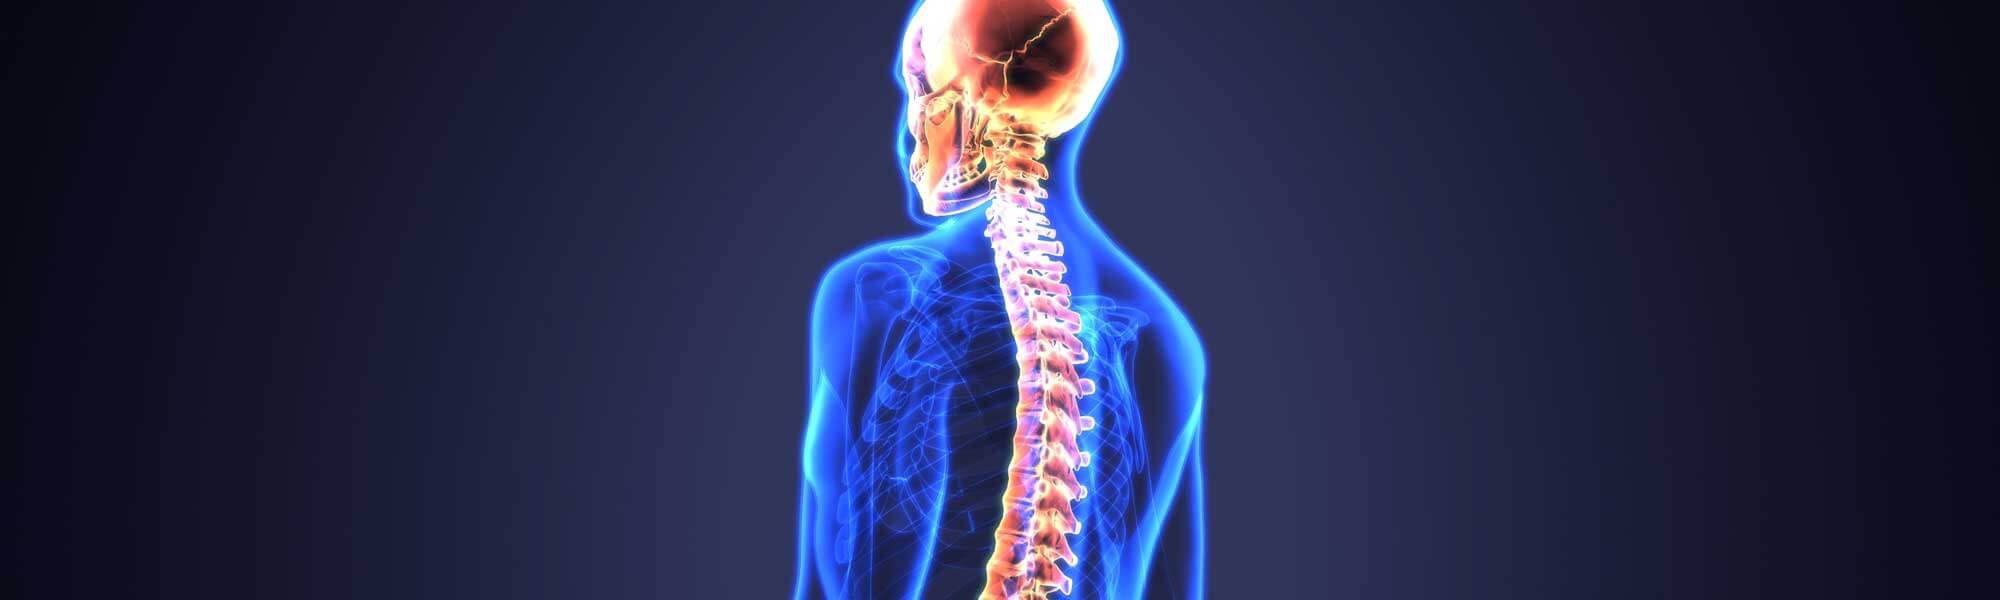 Transparent Human Body Highlighting Spine